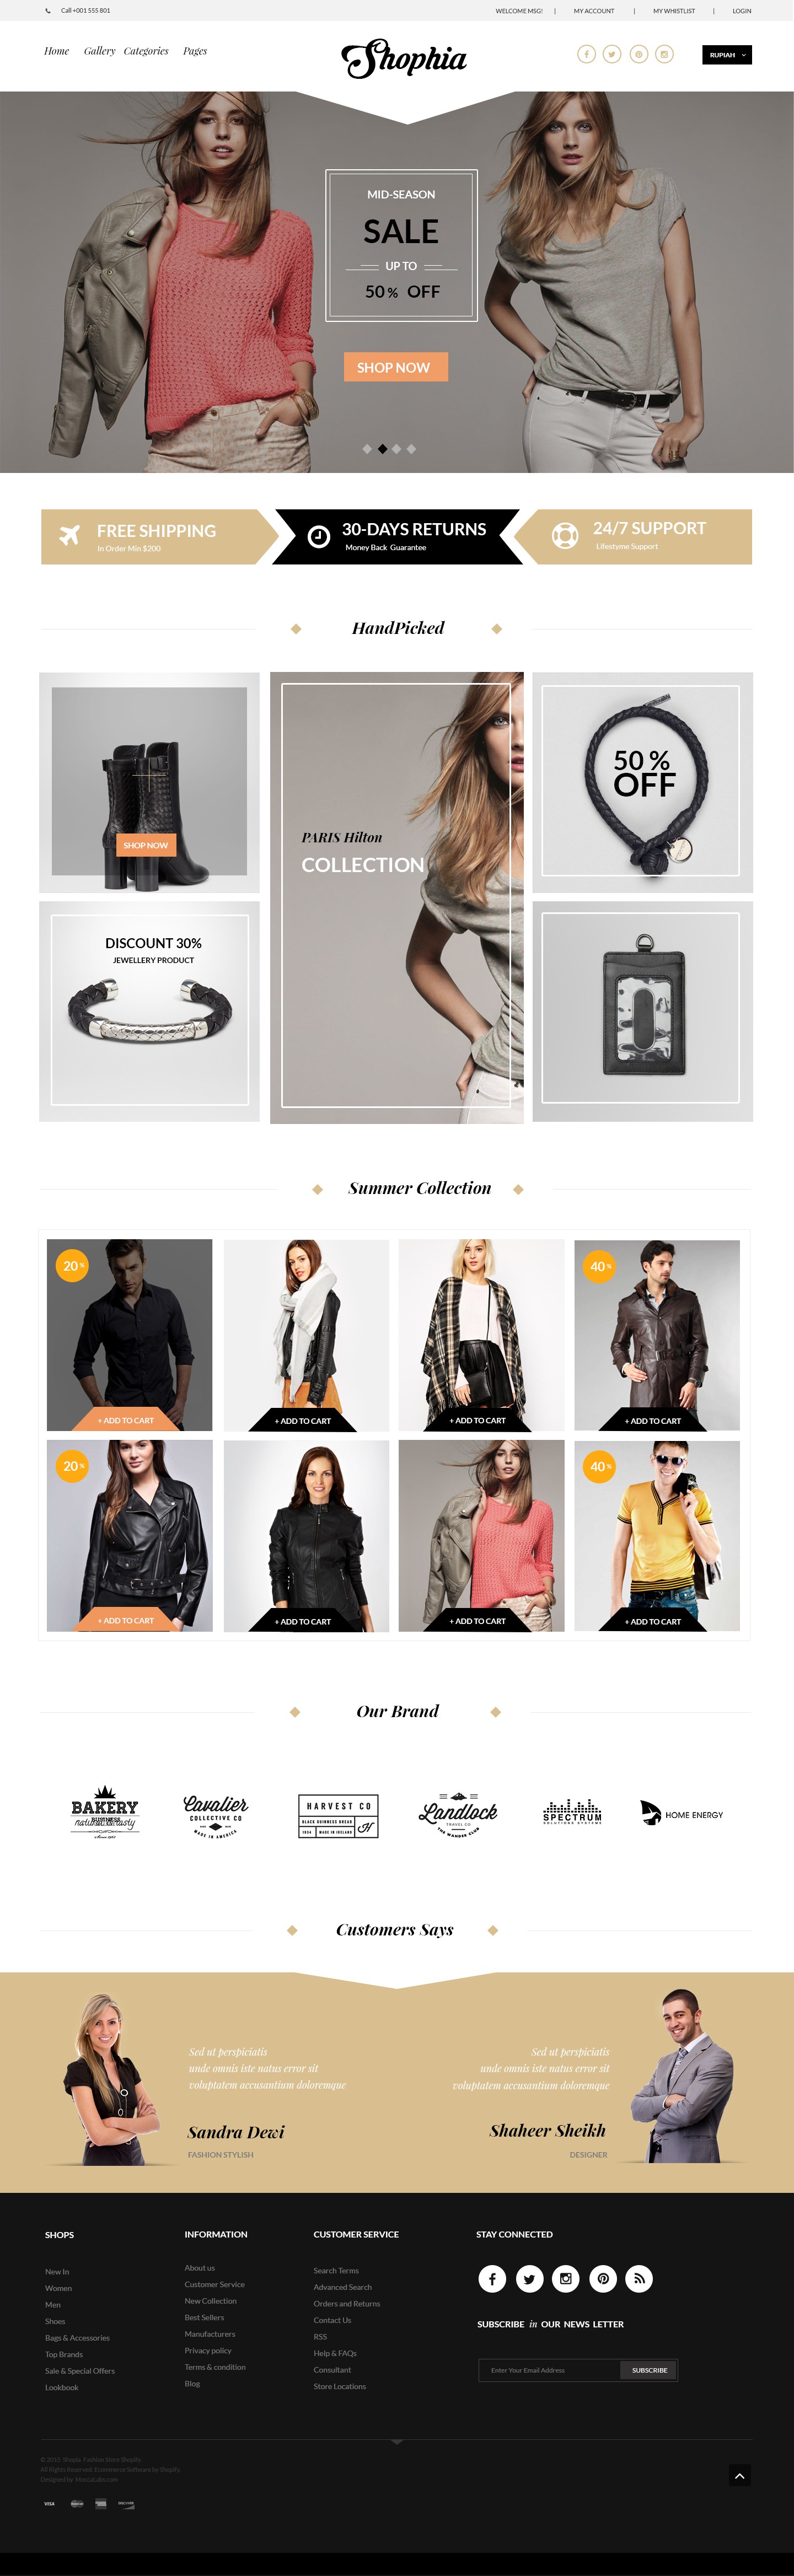 Free Fashion eCommerce Design PSD | Cart Craze